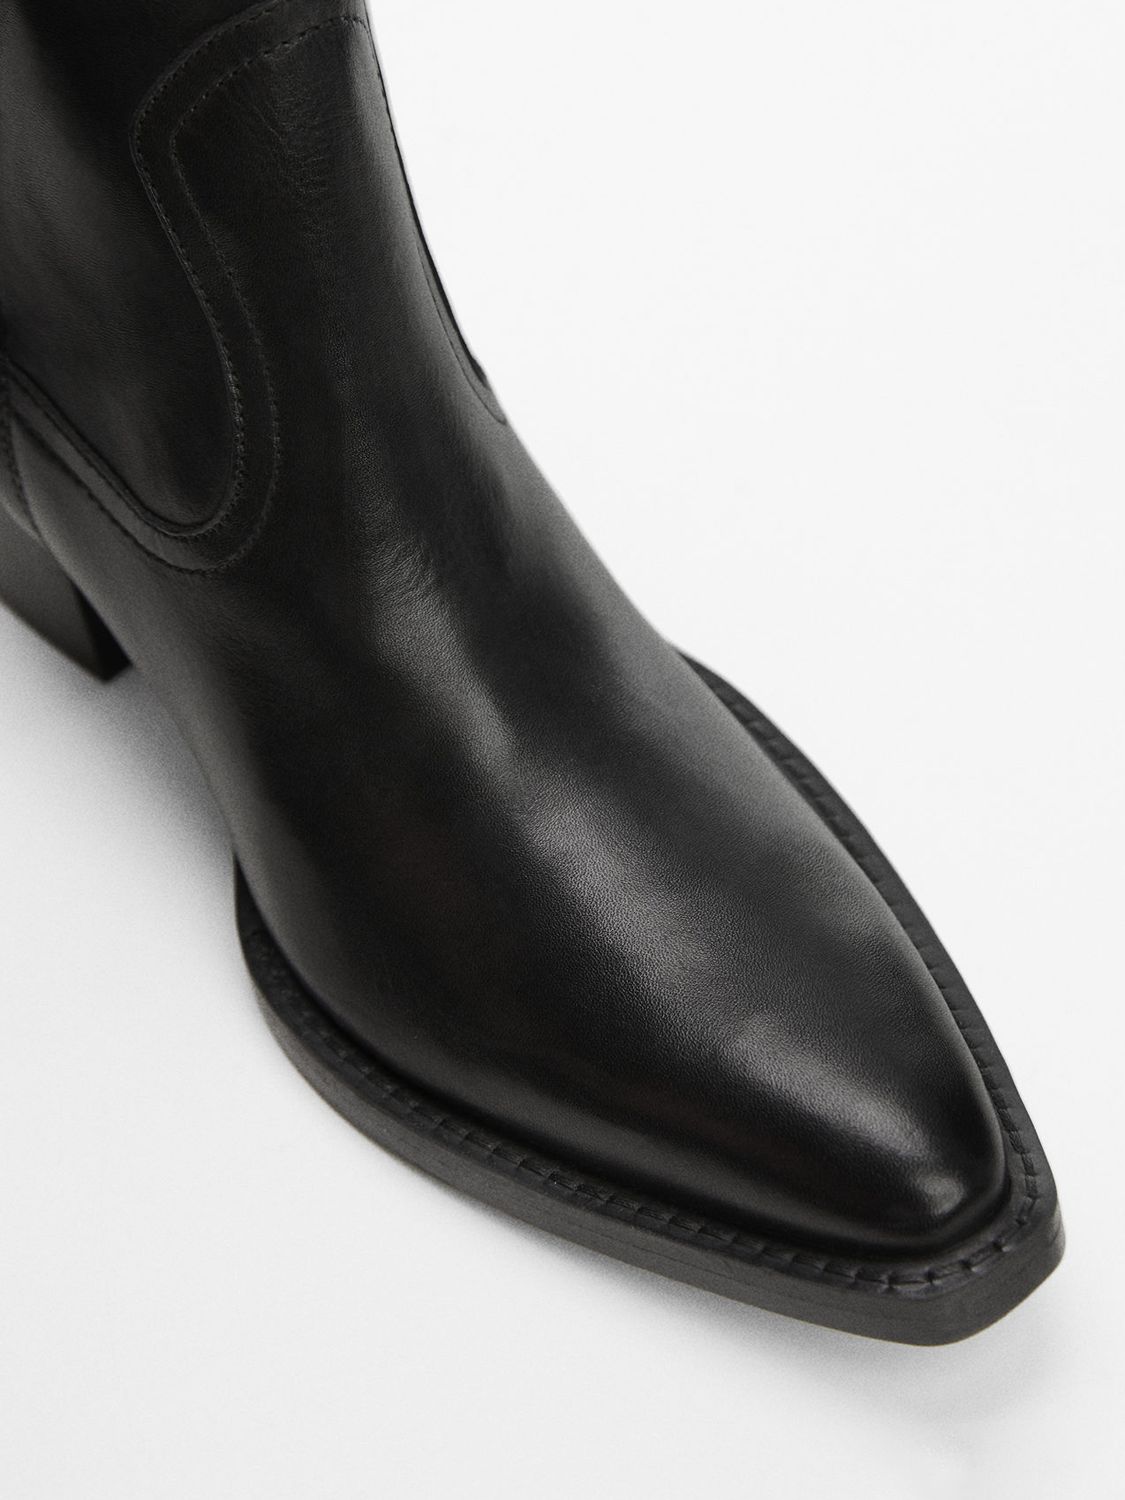 Mango Coa Leather Cowboy Boots, Black at John Lewis & Partners